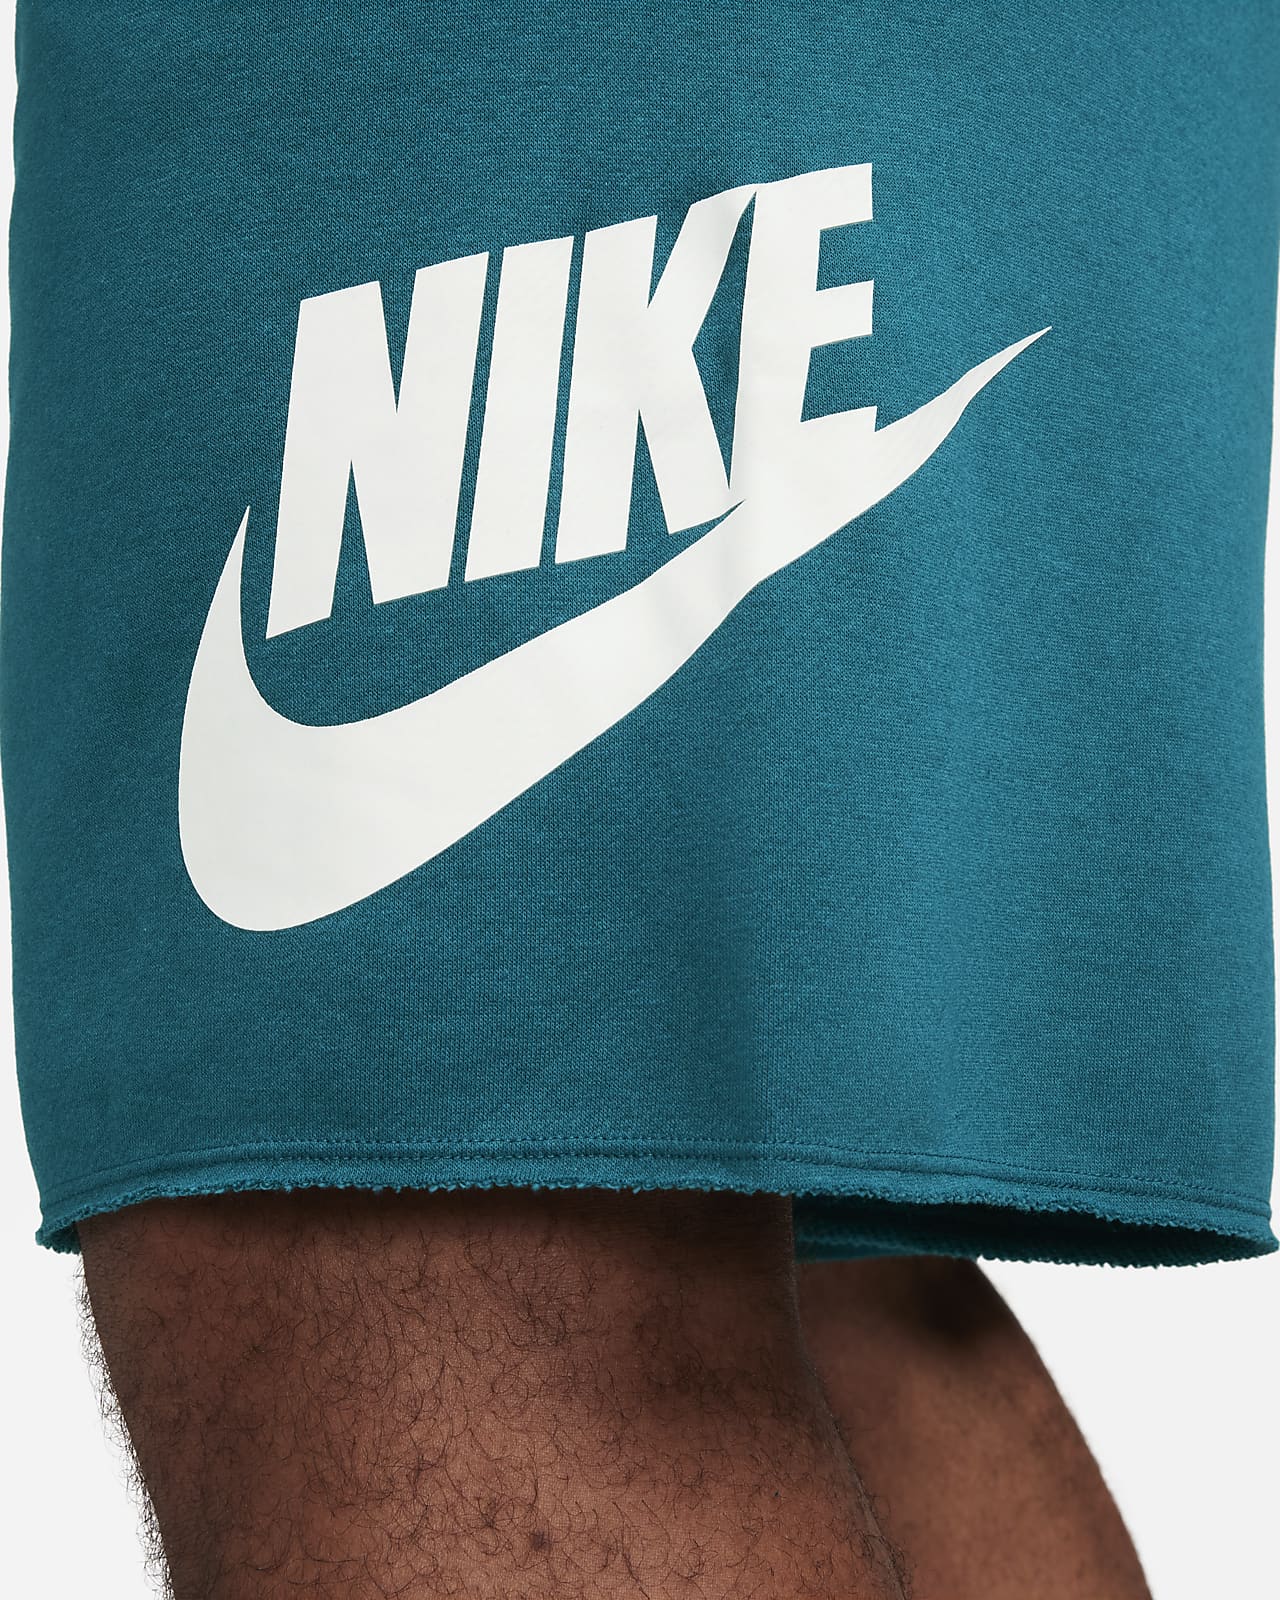 Nike Club Alumni Men's French Terry Shorts